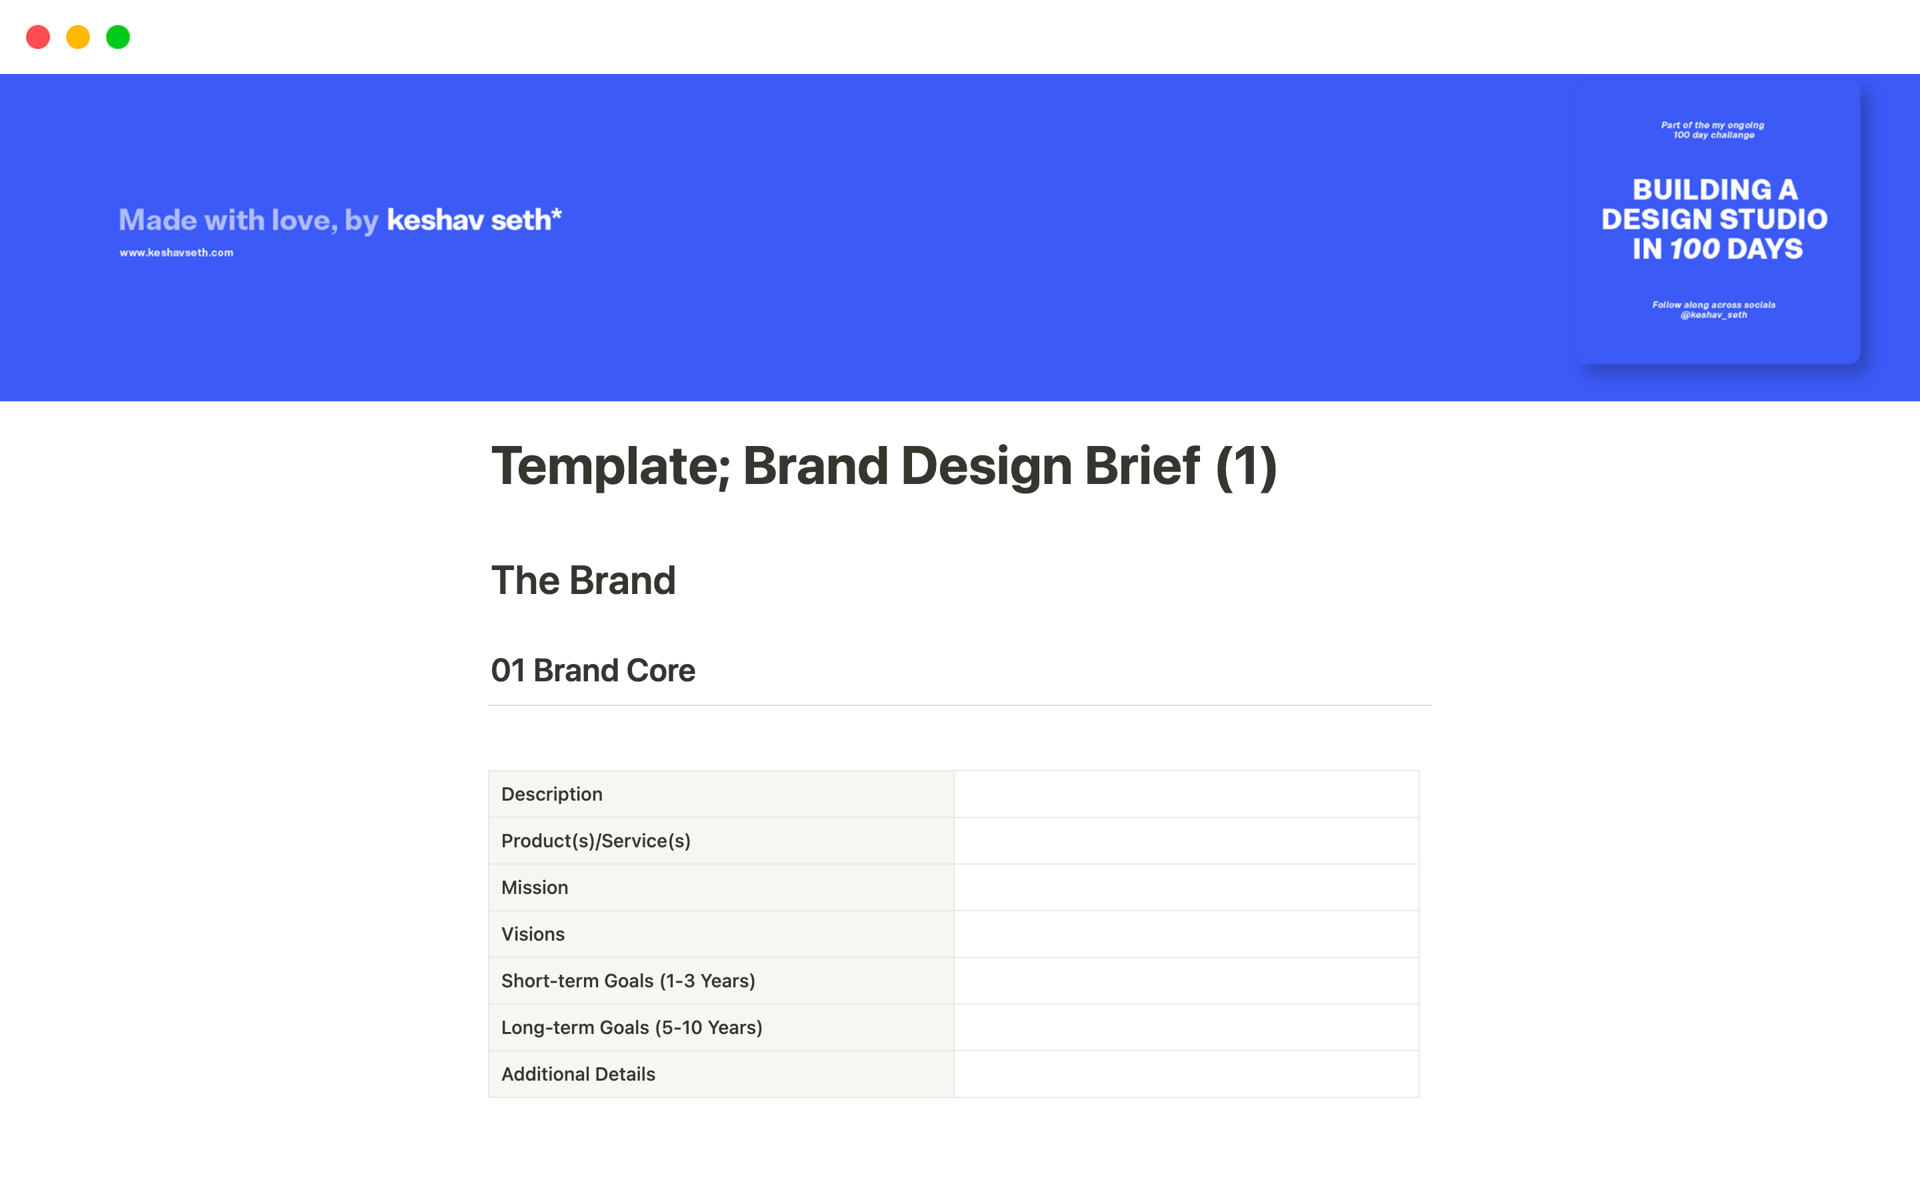 Aperçu du modèle de Brand Design Brief